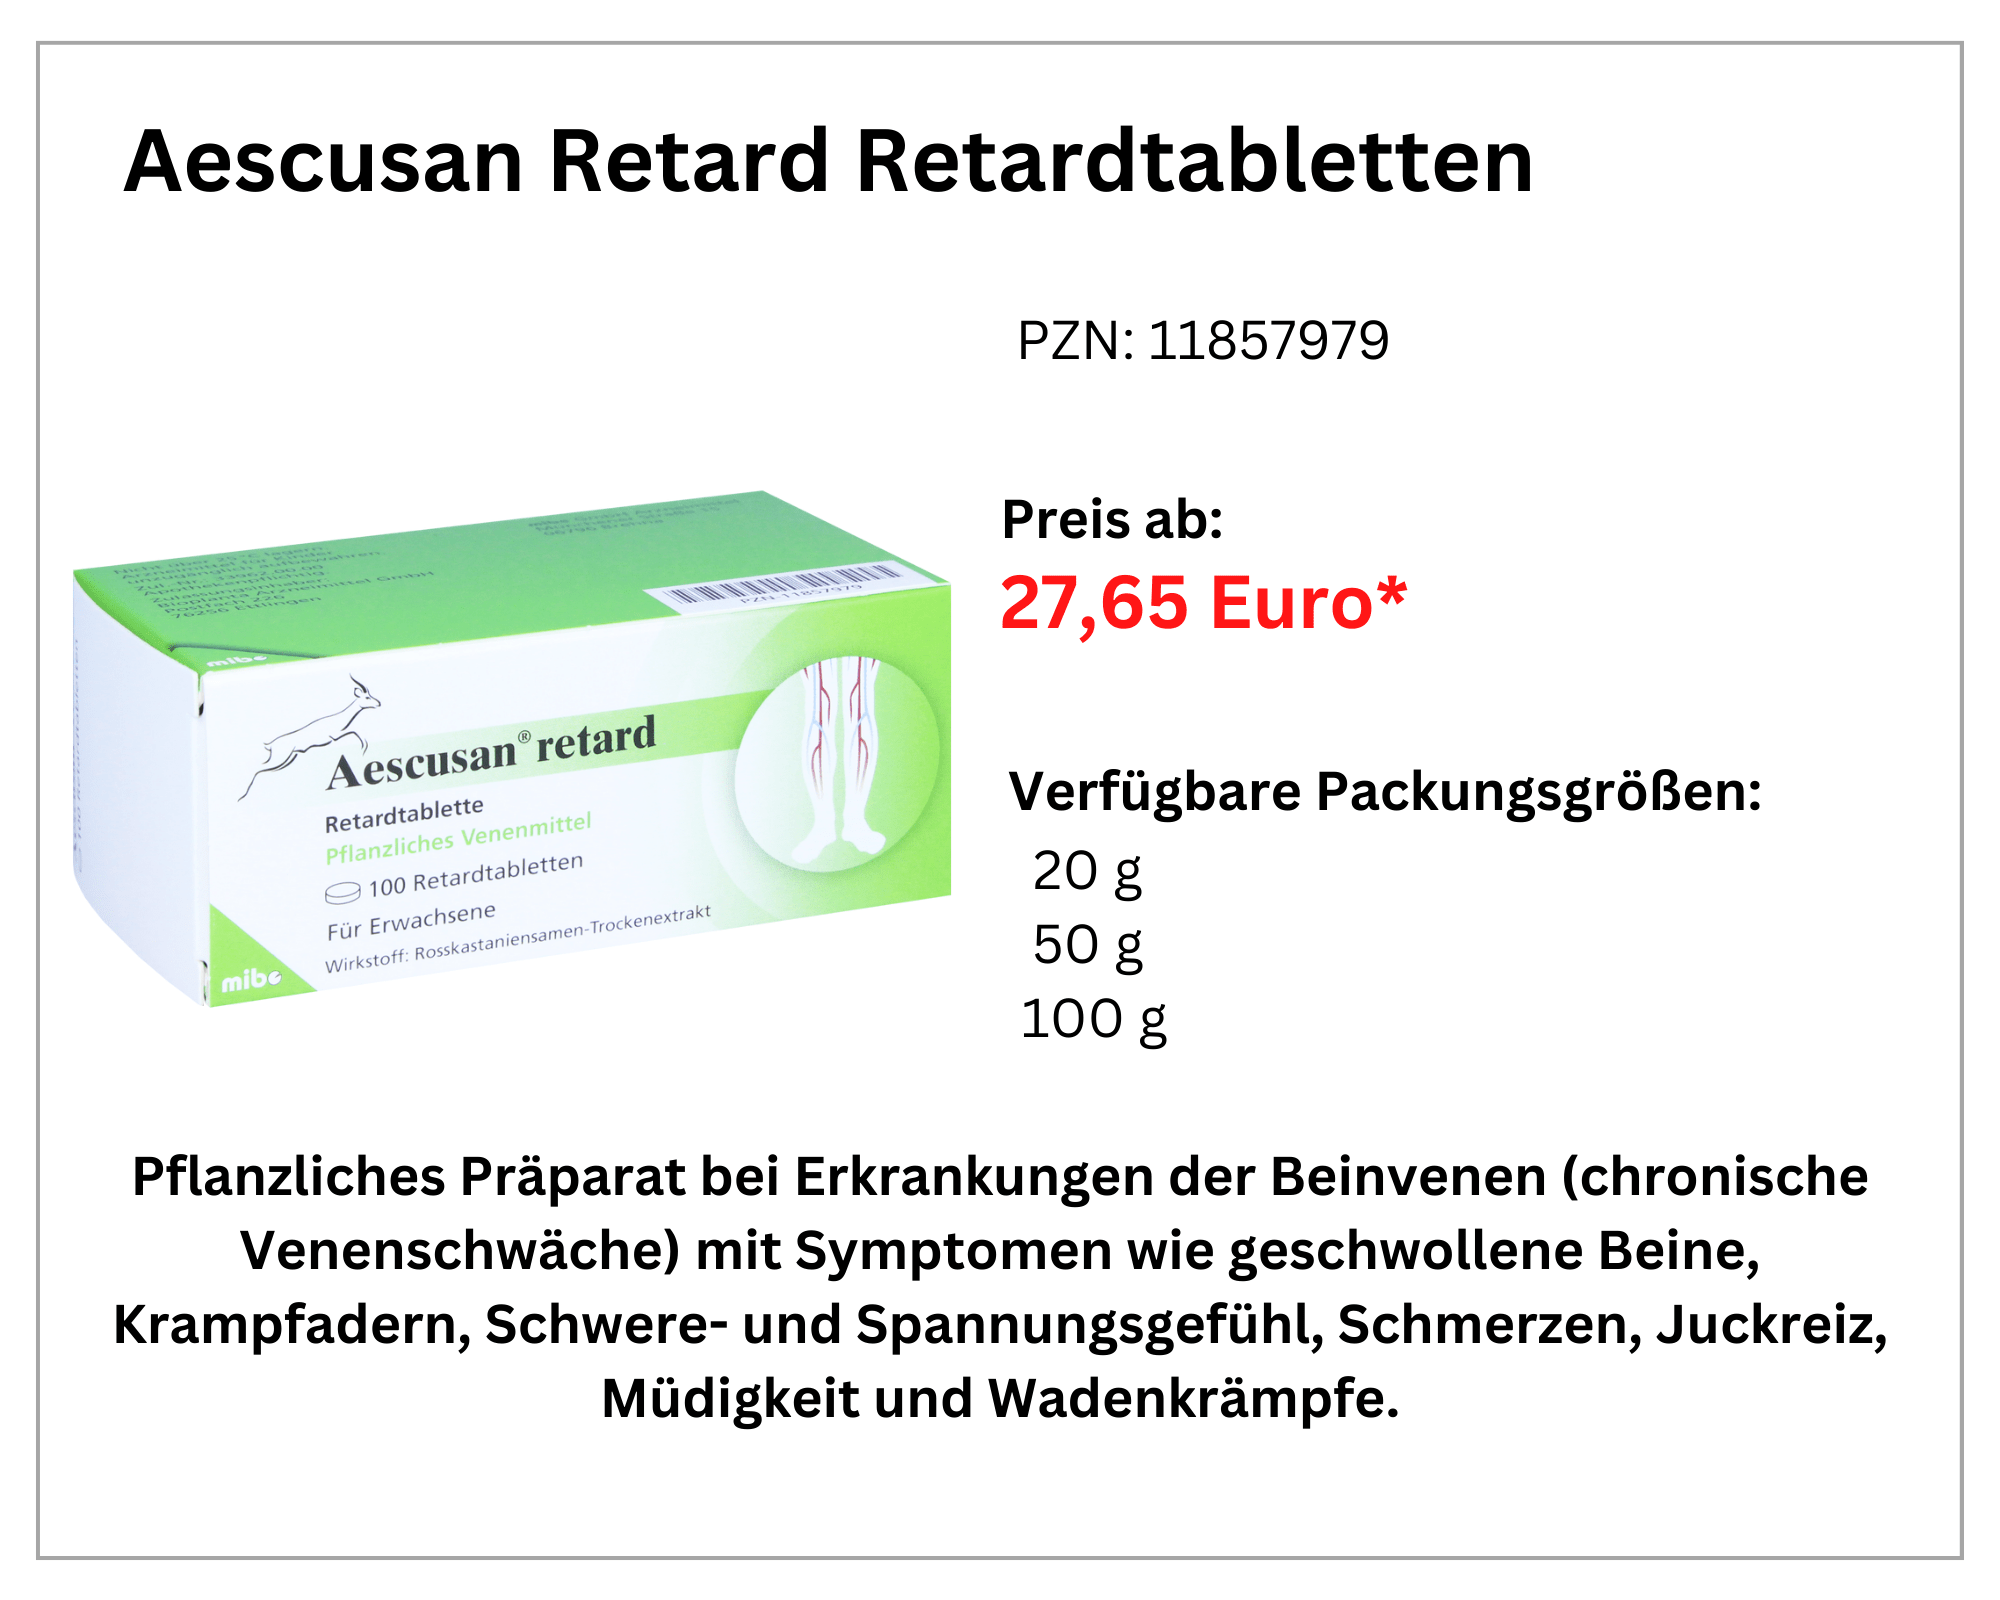  Aescusan retard Retardtabletten width=